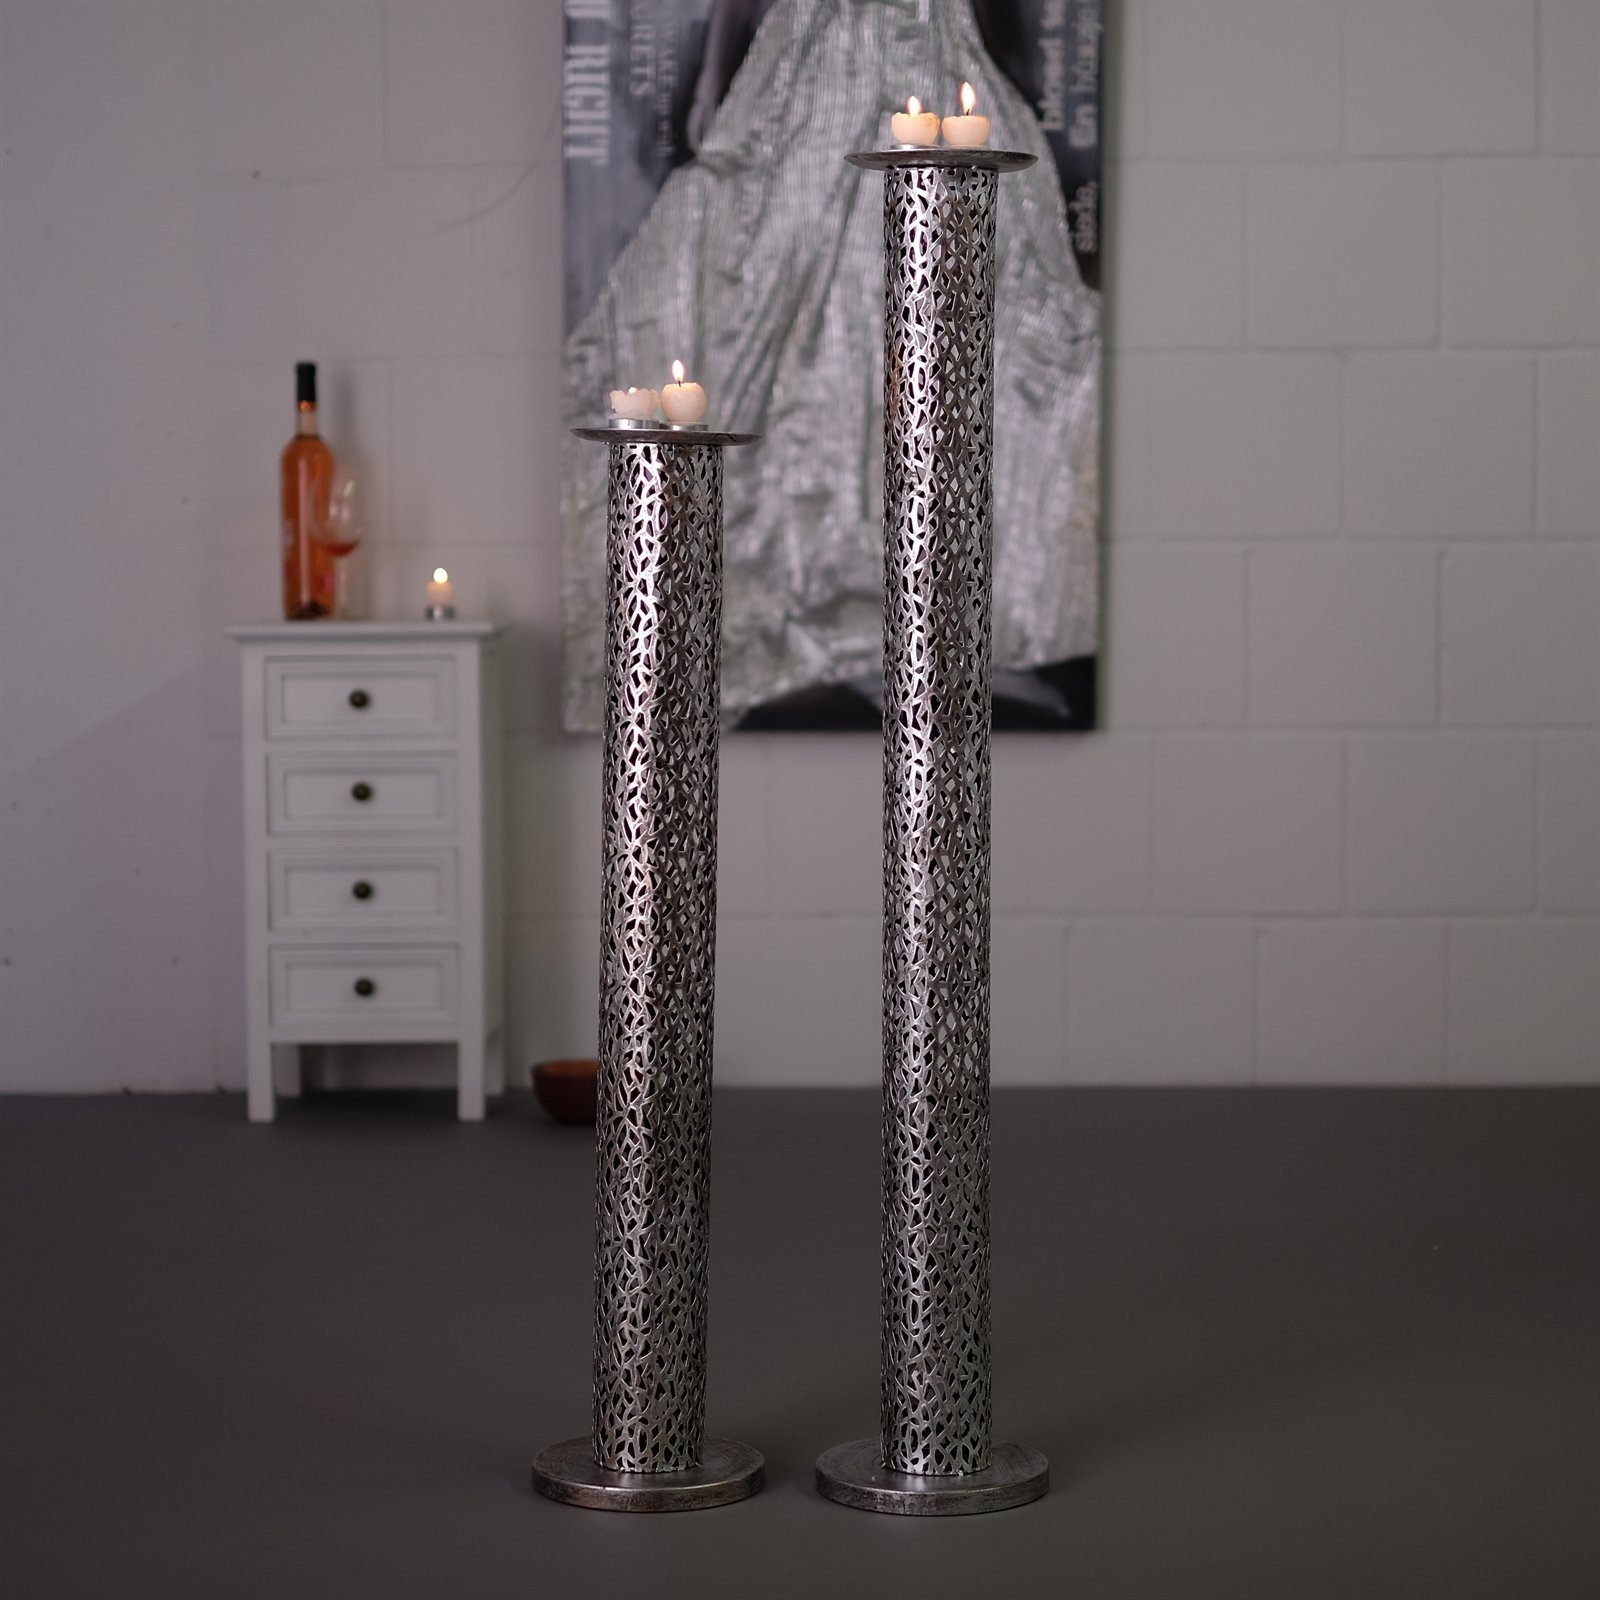 KERZENSTÄNDER Metall, DESIGN DELIGHTS "ETERNAL", antik-silber, RIESEN 80 cm, Säule Kerzenständer